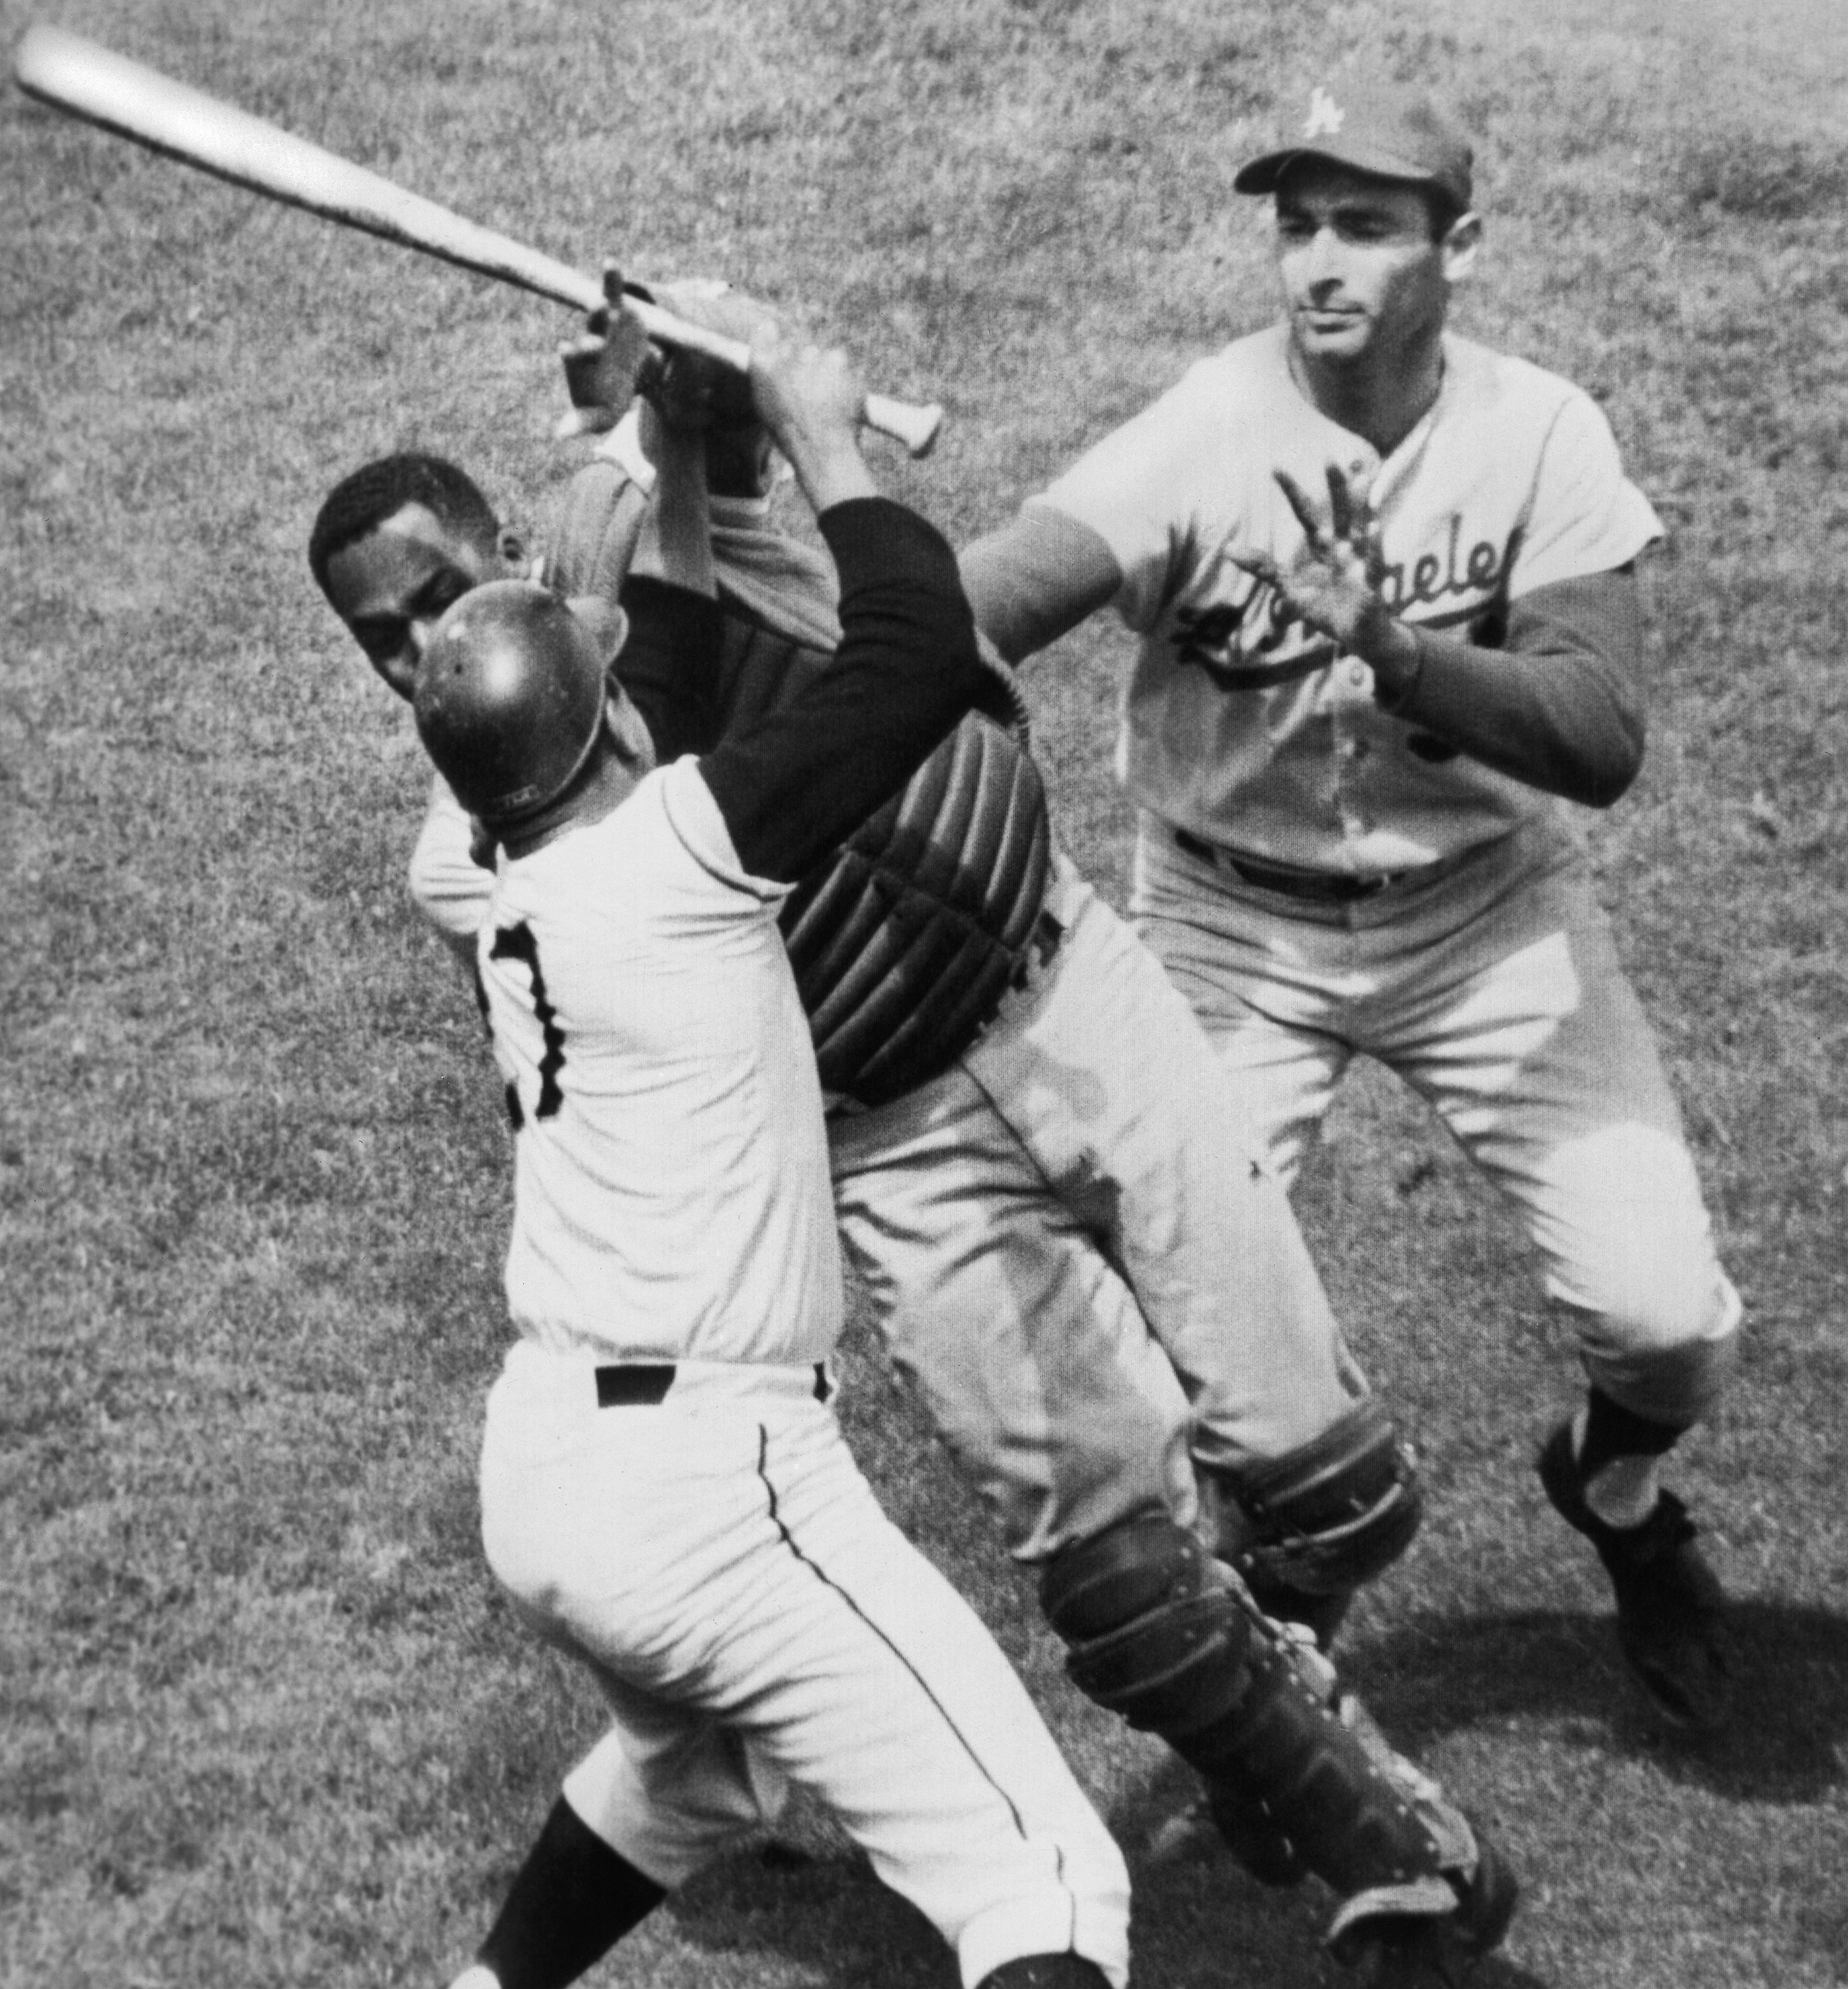 Juan Marichal hit John Roseboro with bat in ugly baseball brawl 50 years ago2984 x 3211